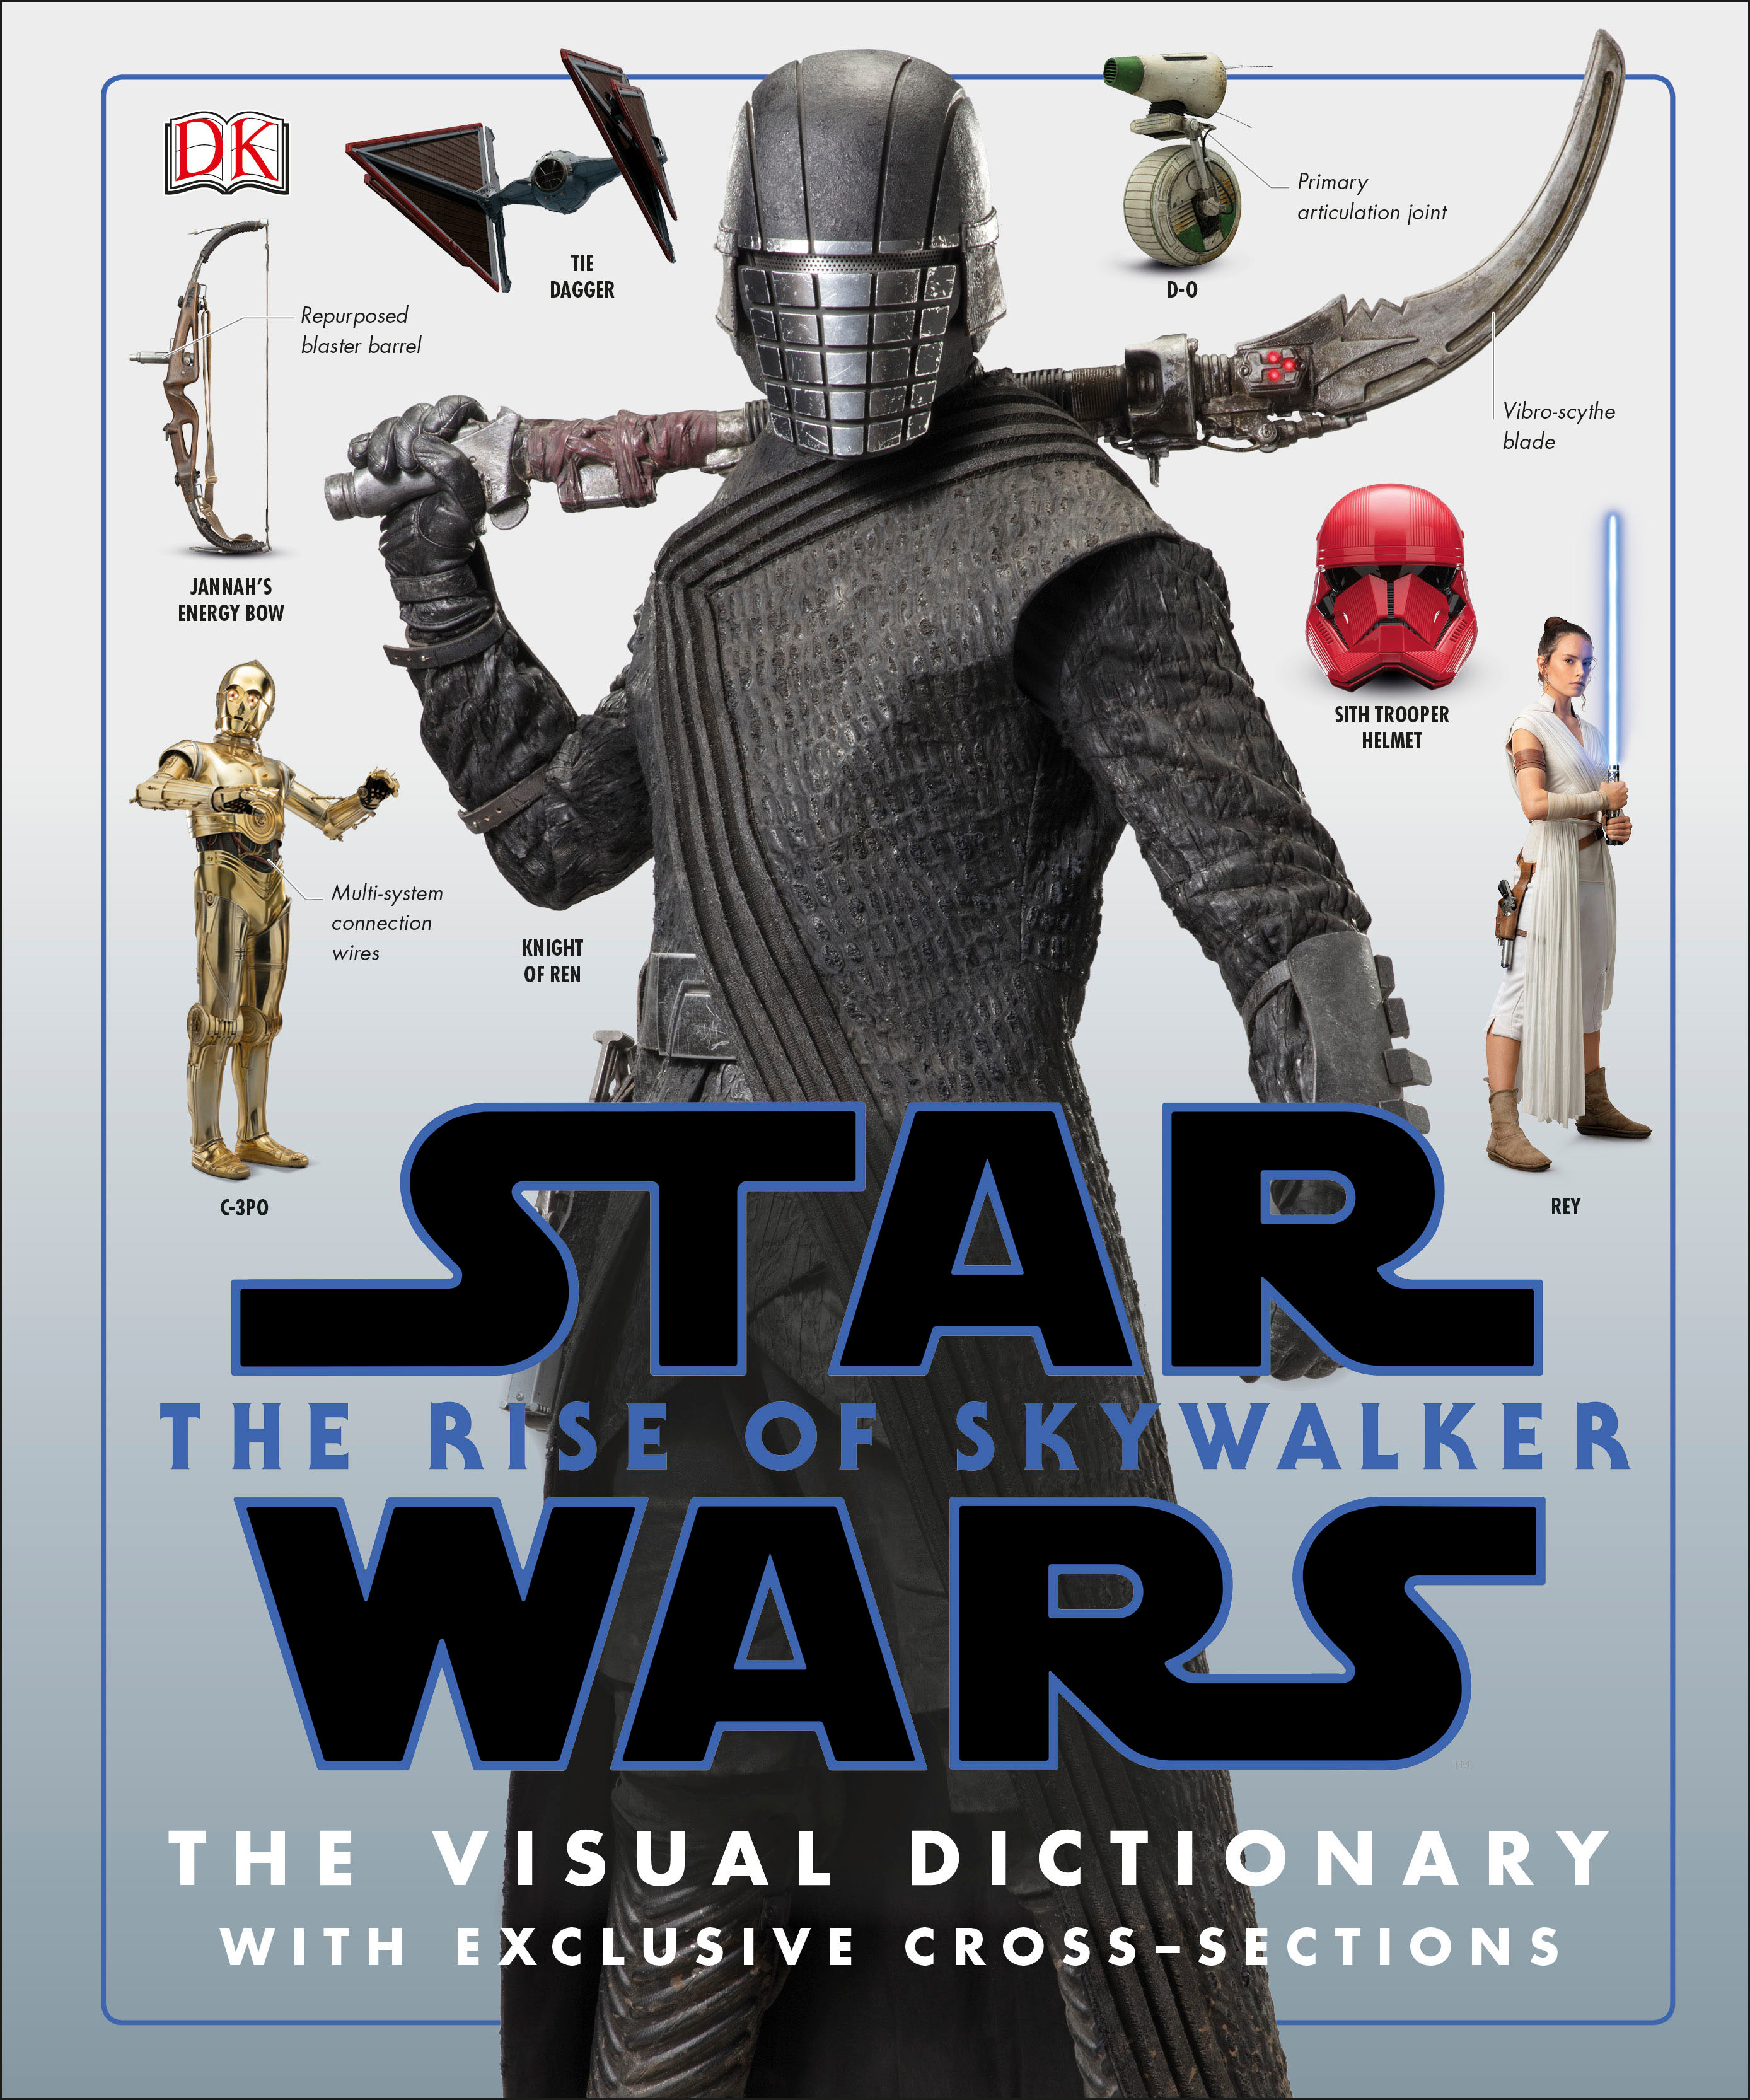 tros-visual-dictionary-cover-hd.jpg